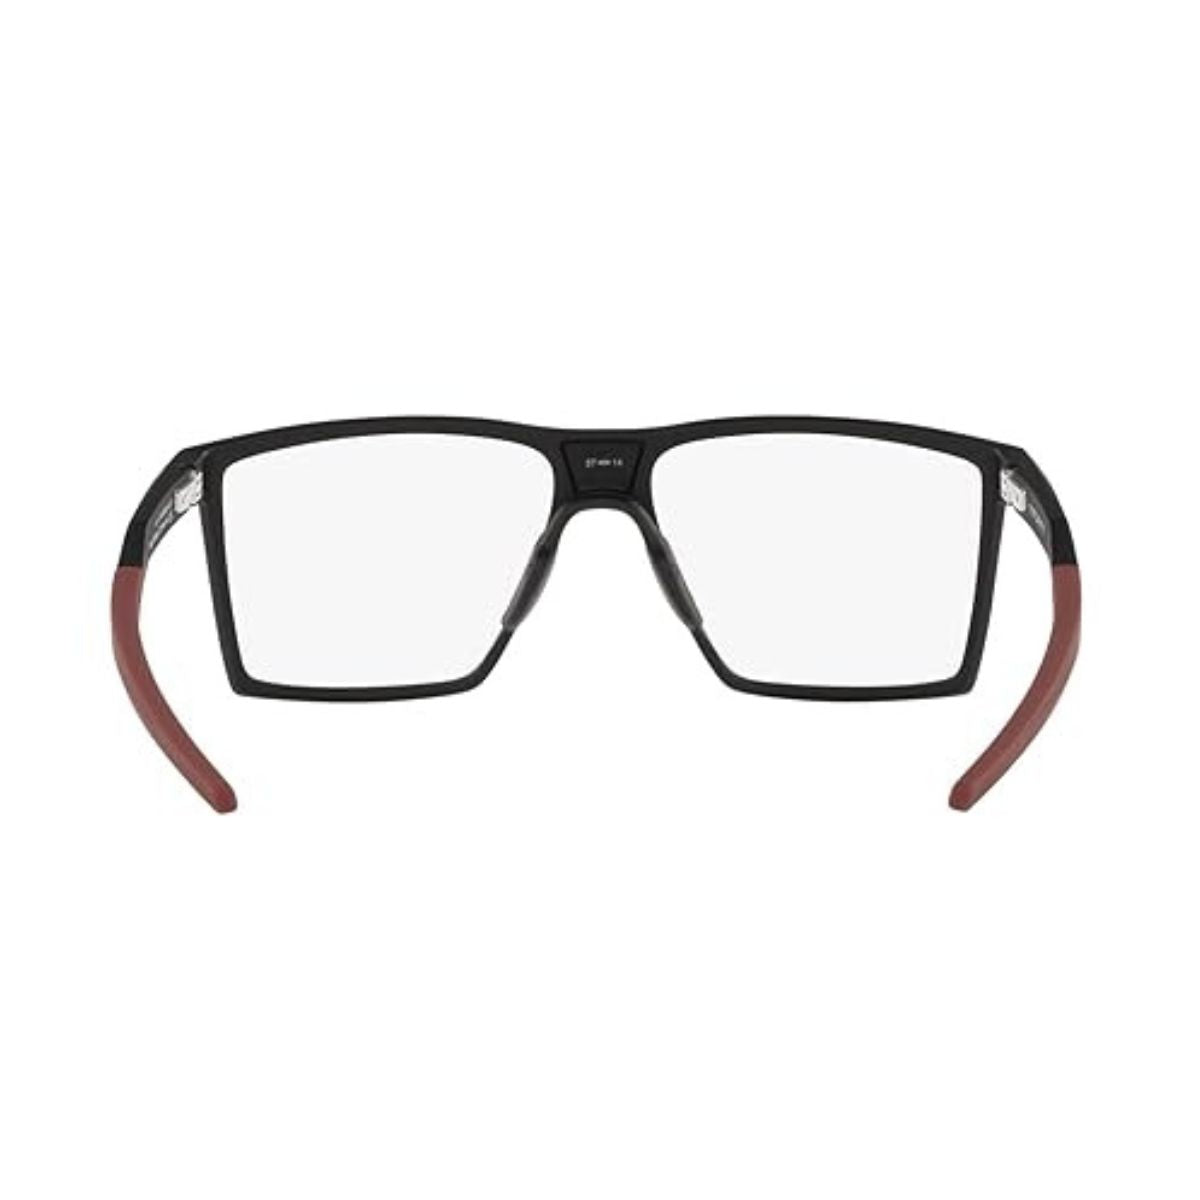 "Oakley 8052 0455 prescription eyeglasses frame for men's online at optorium"